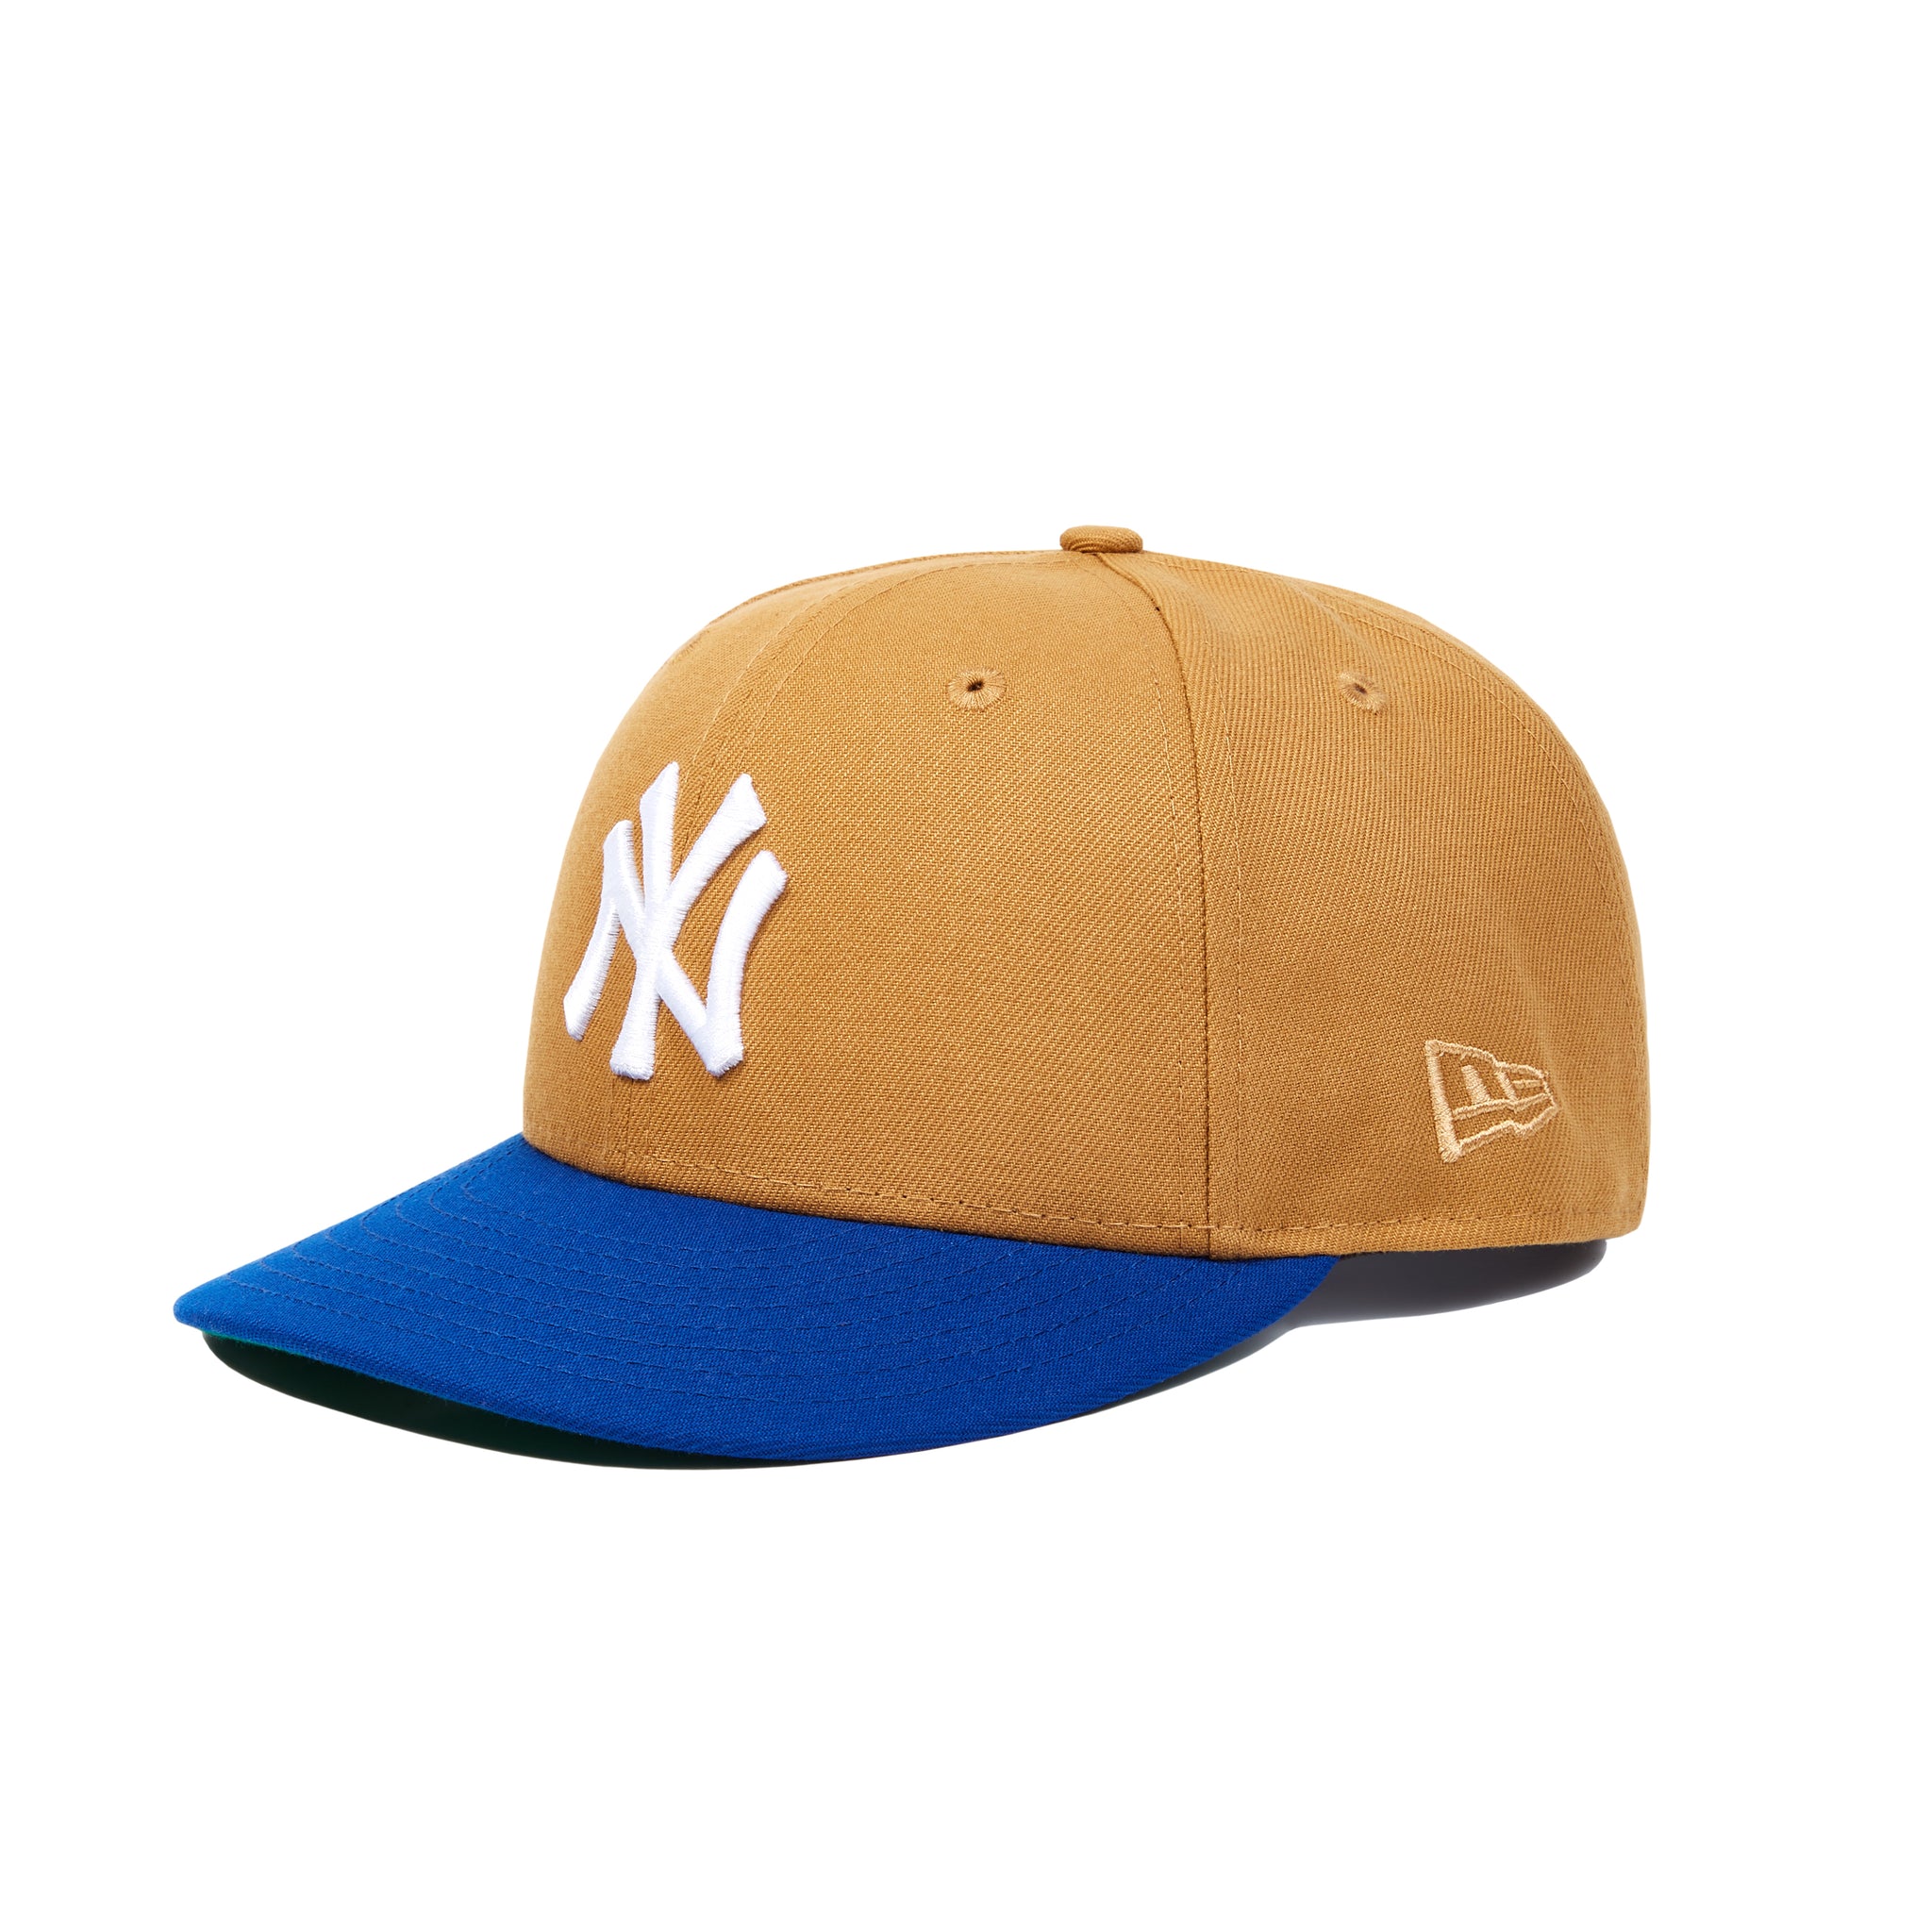 ALLTIMERS - New Era Yankees Hat "Brown Blue"